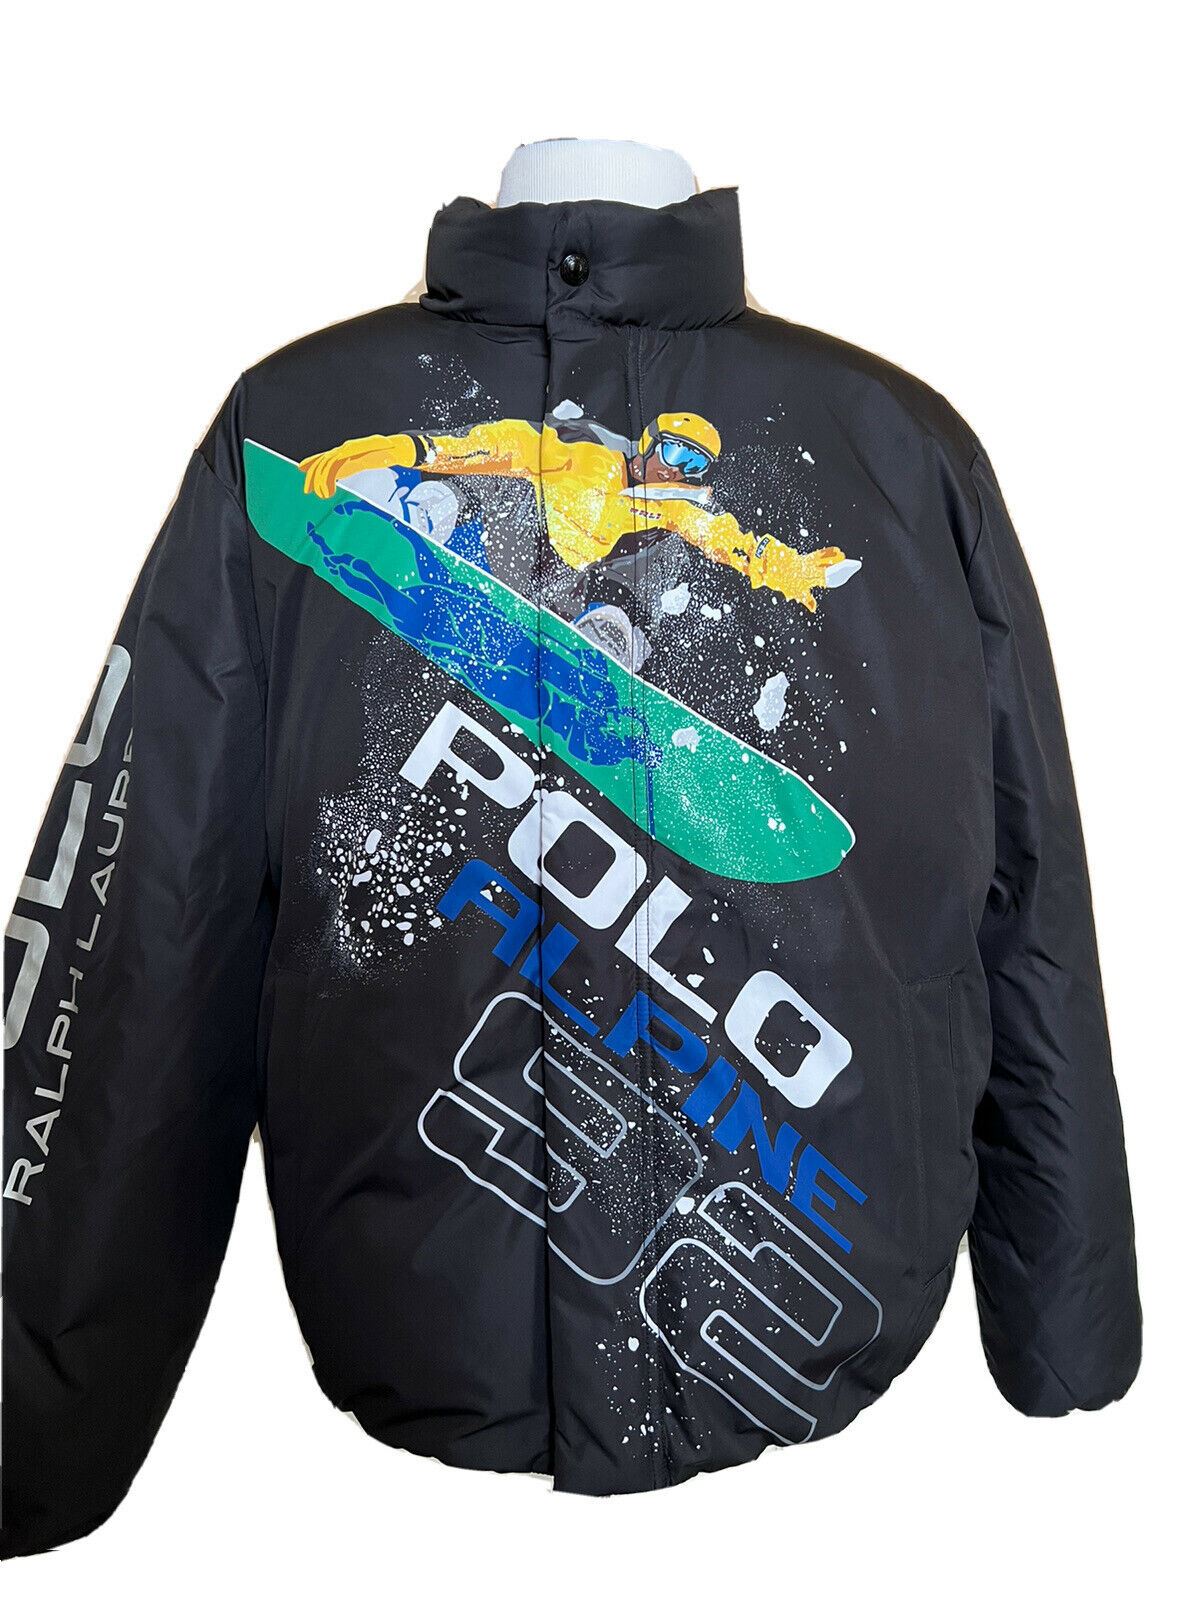 Мужская черная парка-куртка Polo Ralph Lauren Alpine, размер NWT 498 долларов США